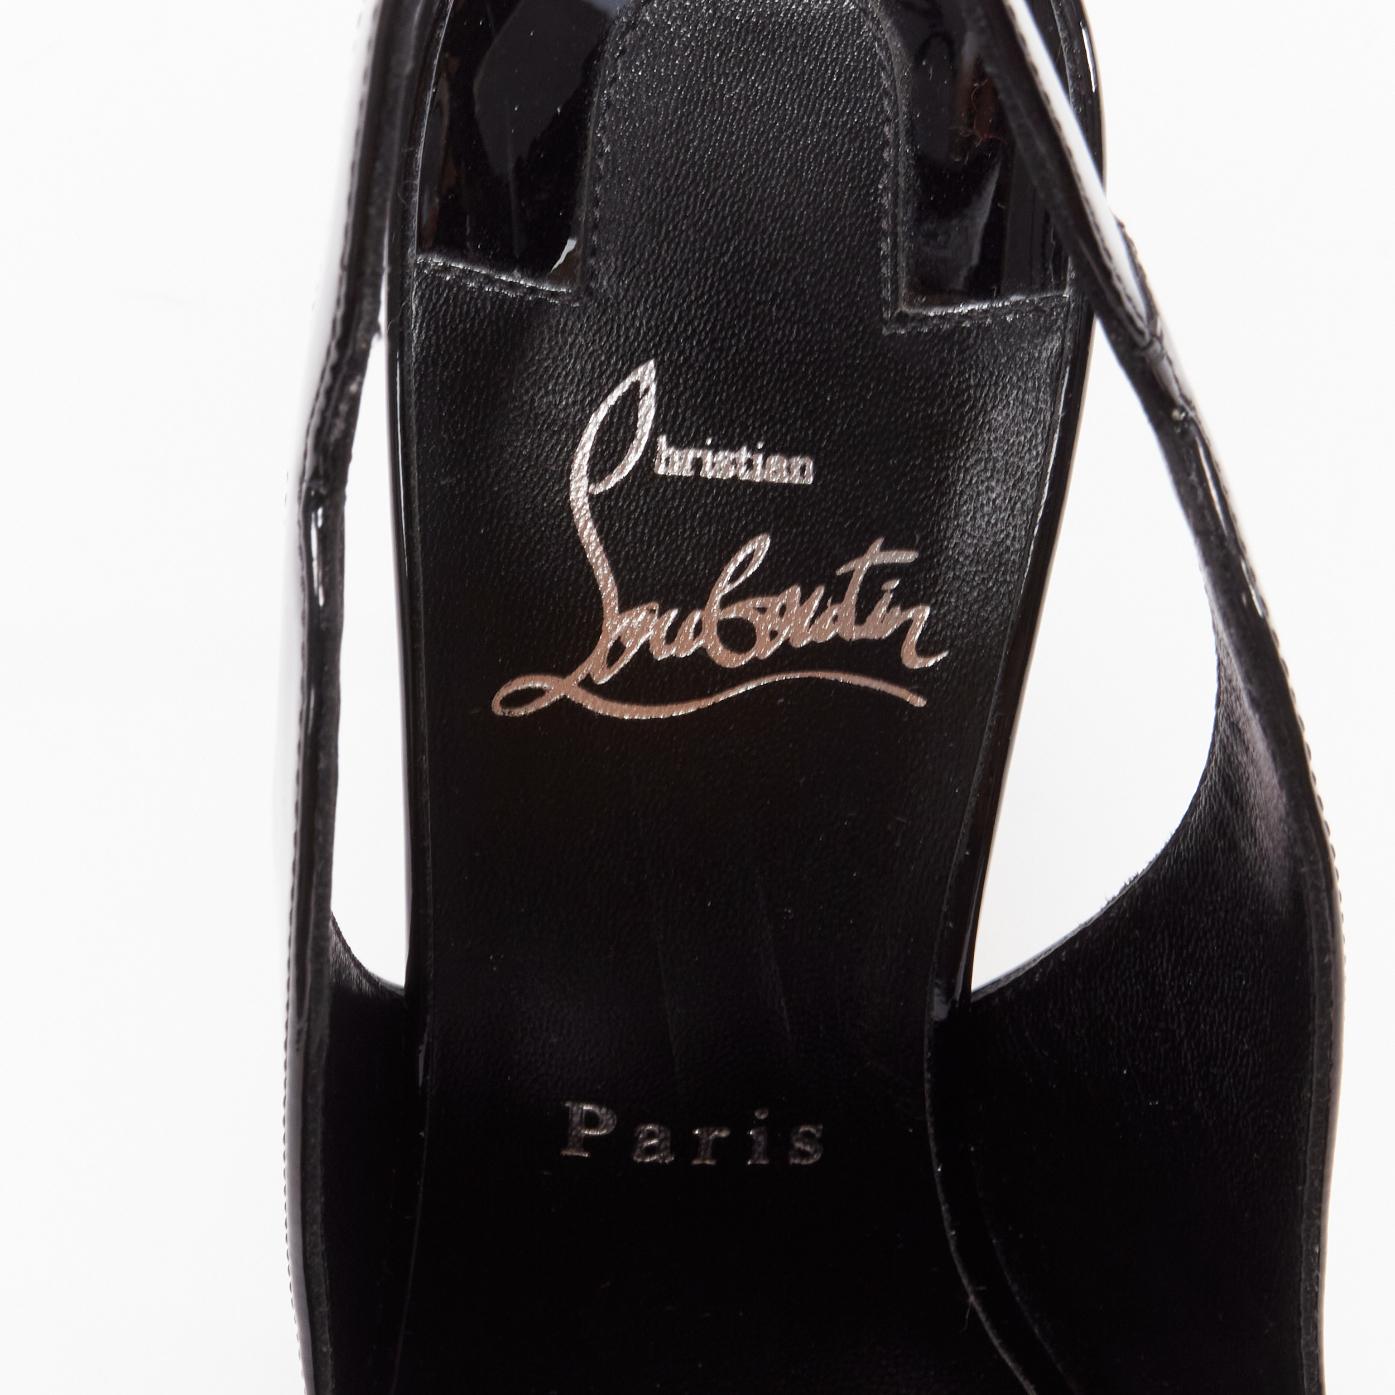 CHRISTIAN LOUBOUTIN Hot Chick Sling 100 black patent scalloped pointy heels EU37 5